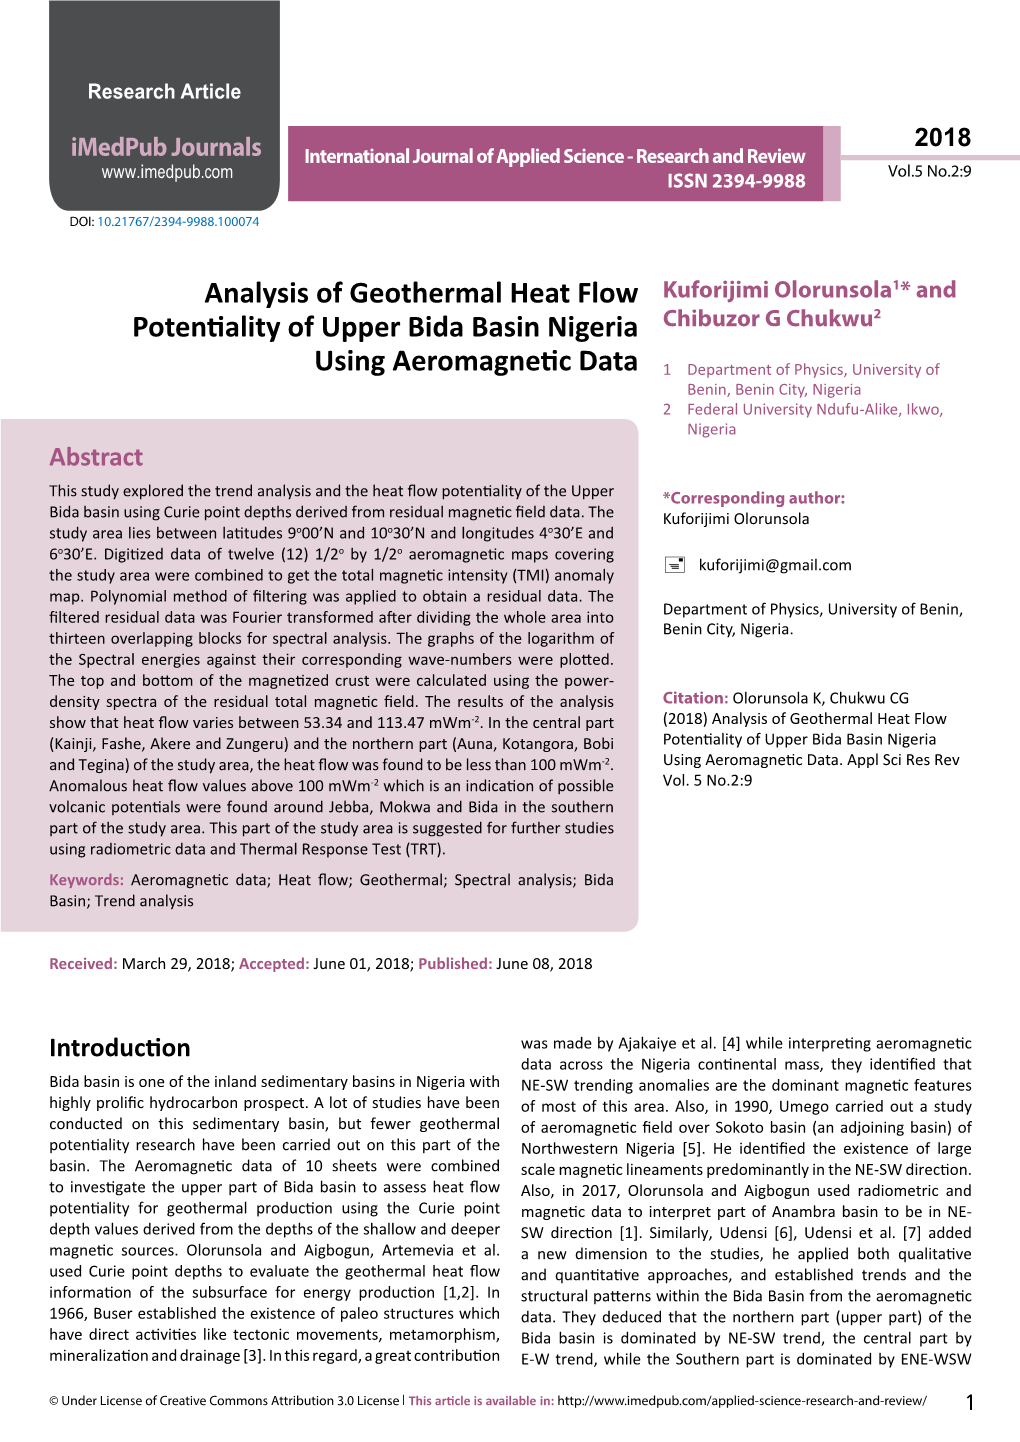 Analysis of Geothermal Heat Flow Potentiality of Upper Bida Basin